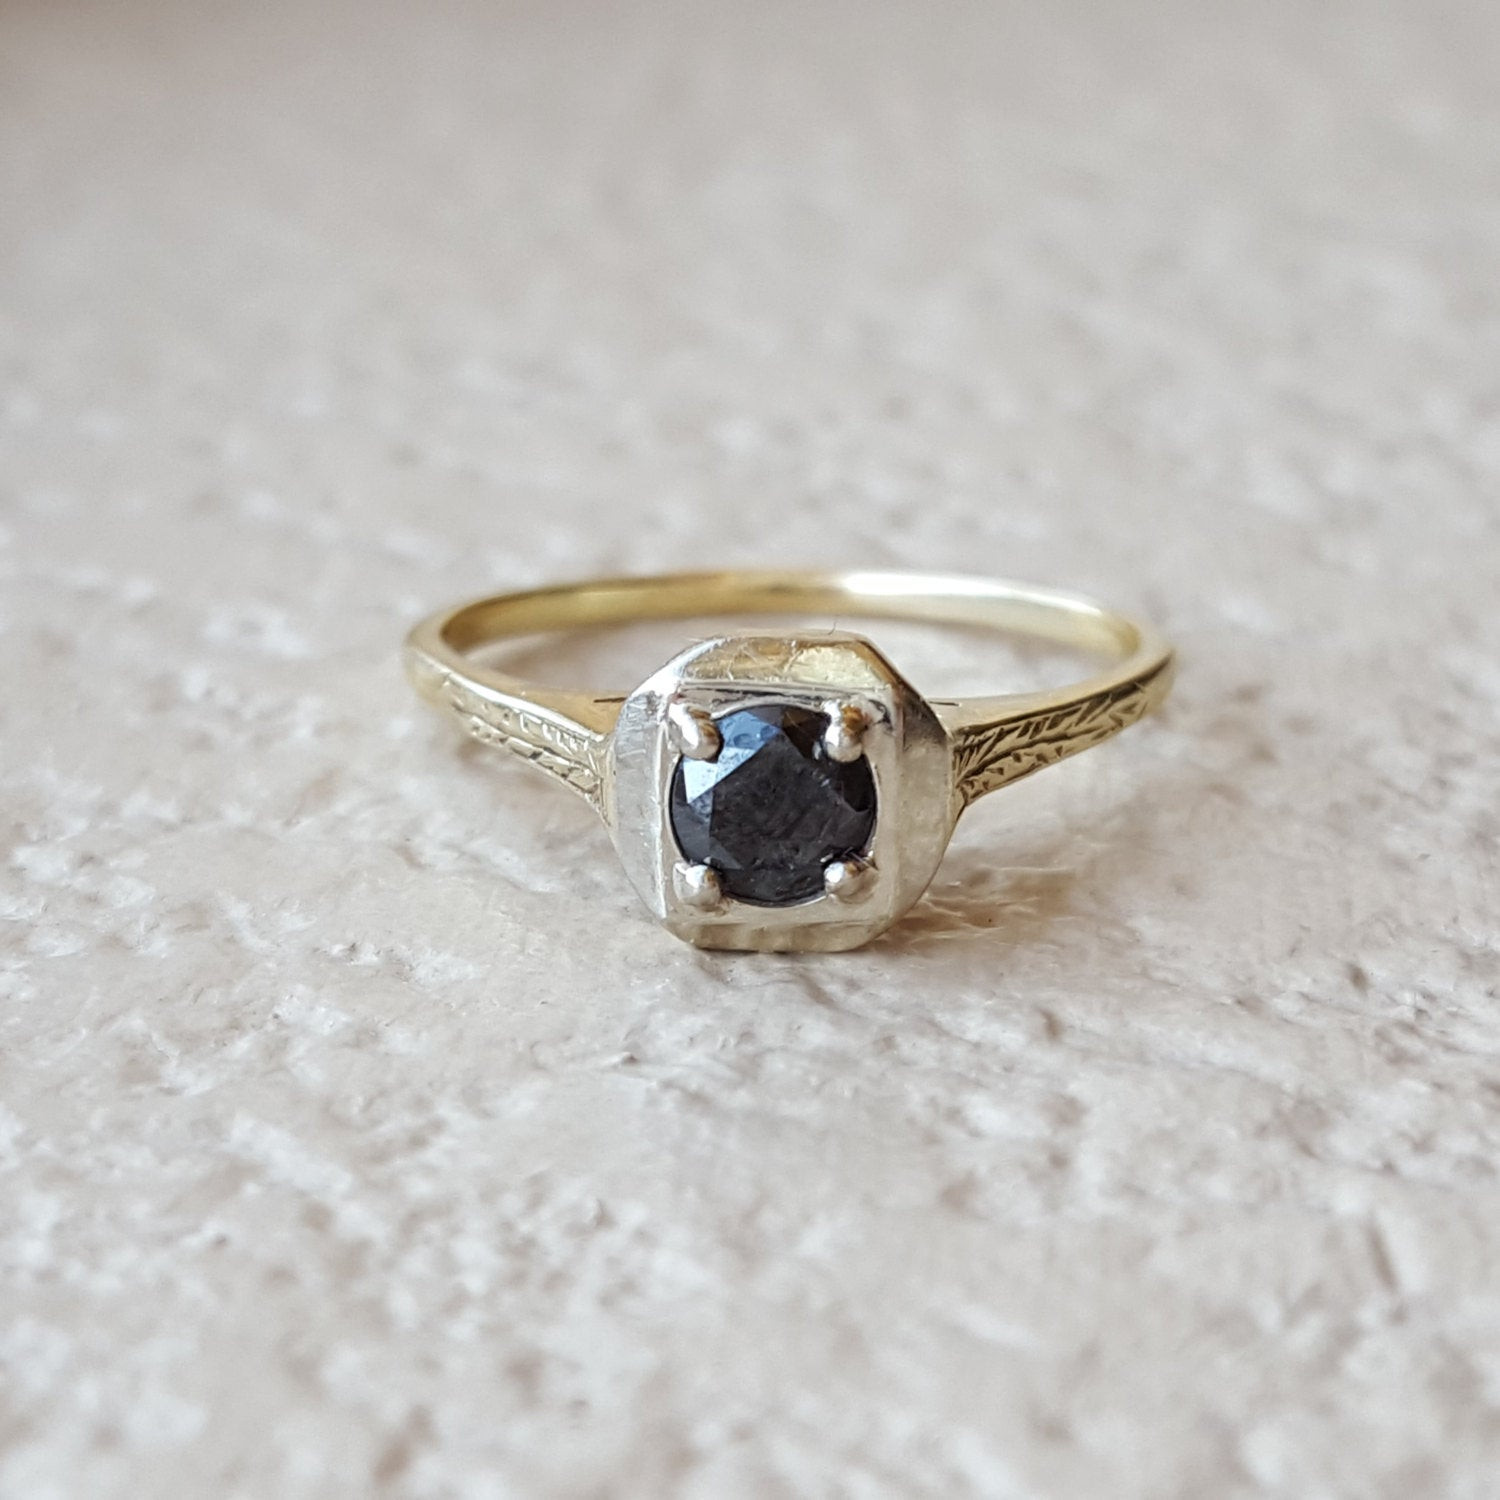 Vintage Black Diamond Engagement Rings
 Rare Vintage Black Diamond Carbonado Unique Engagement Ring